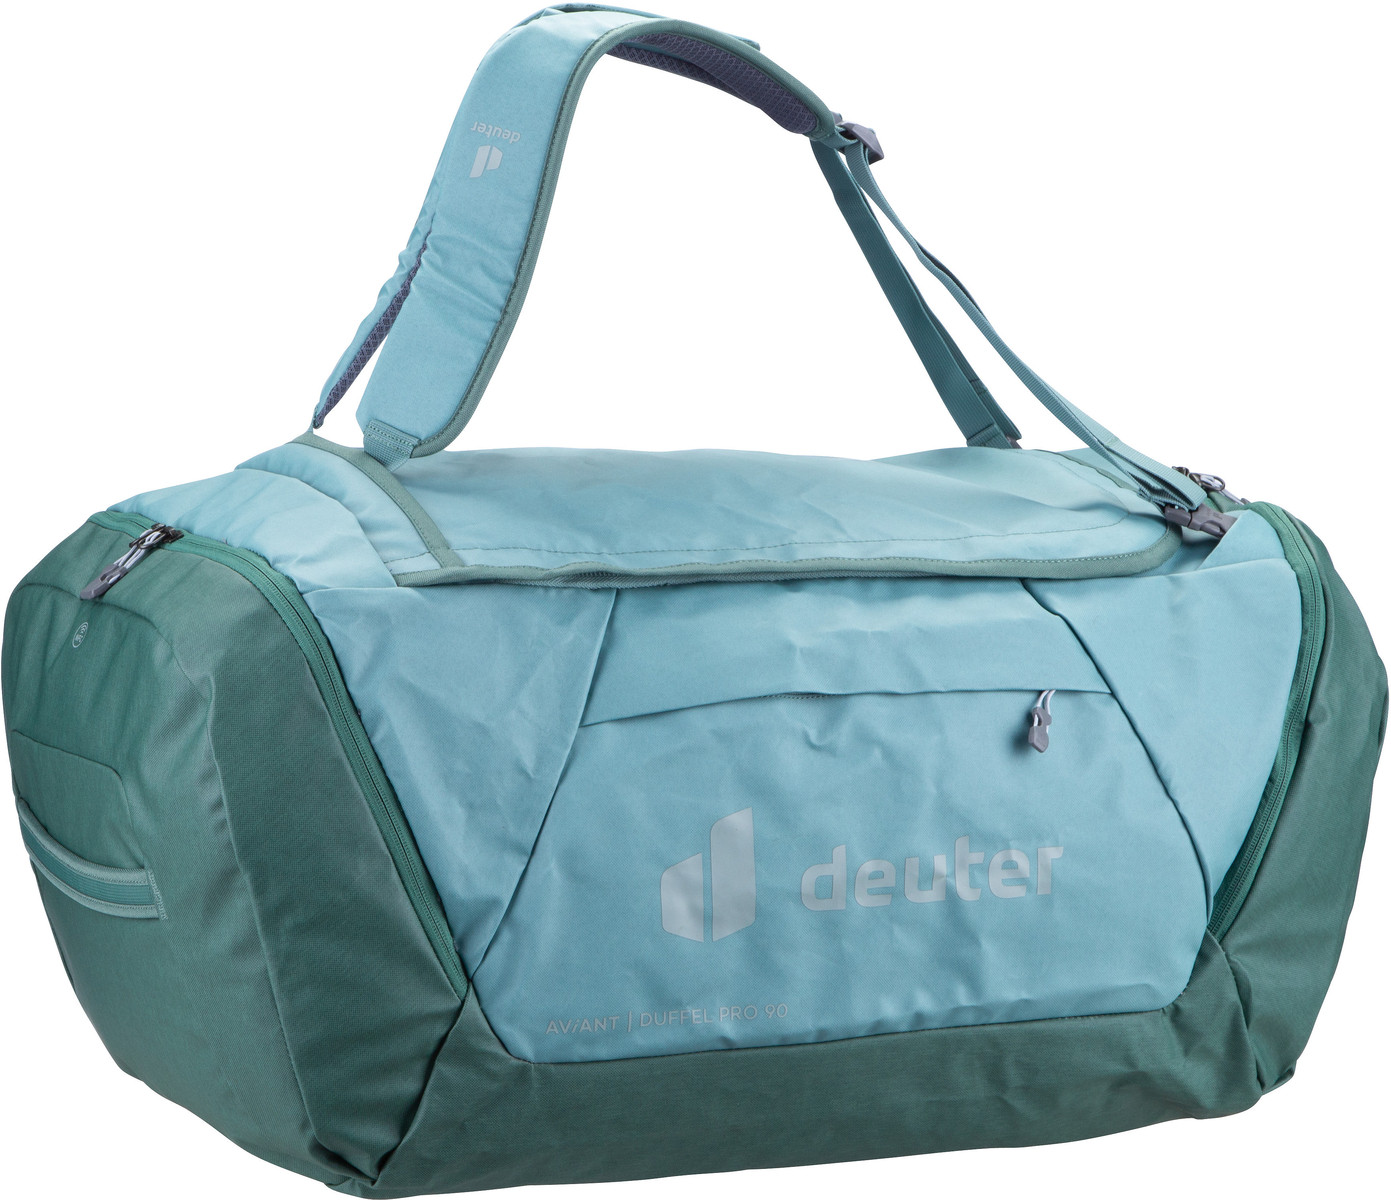 Deuter  Aviant Duffel Pro 90 - Duffle Bag - Grün (Jade/Seagreen)